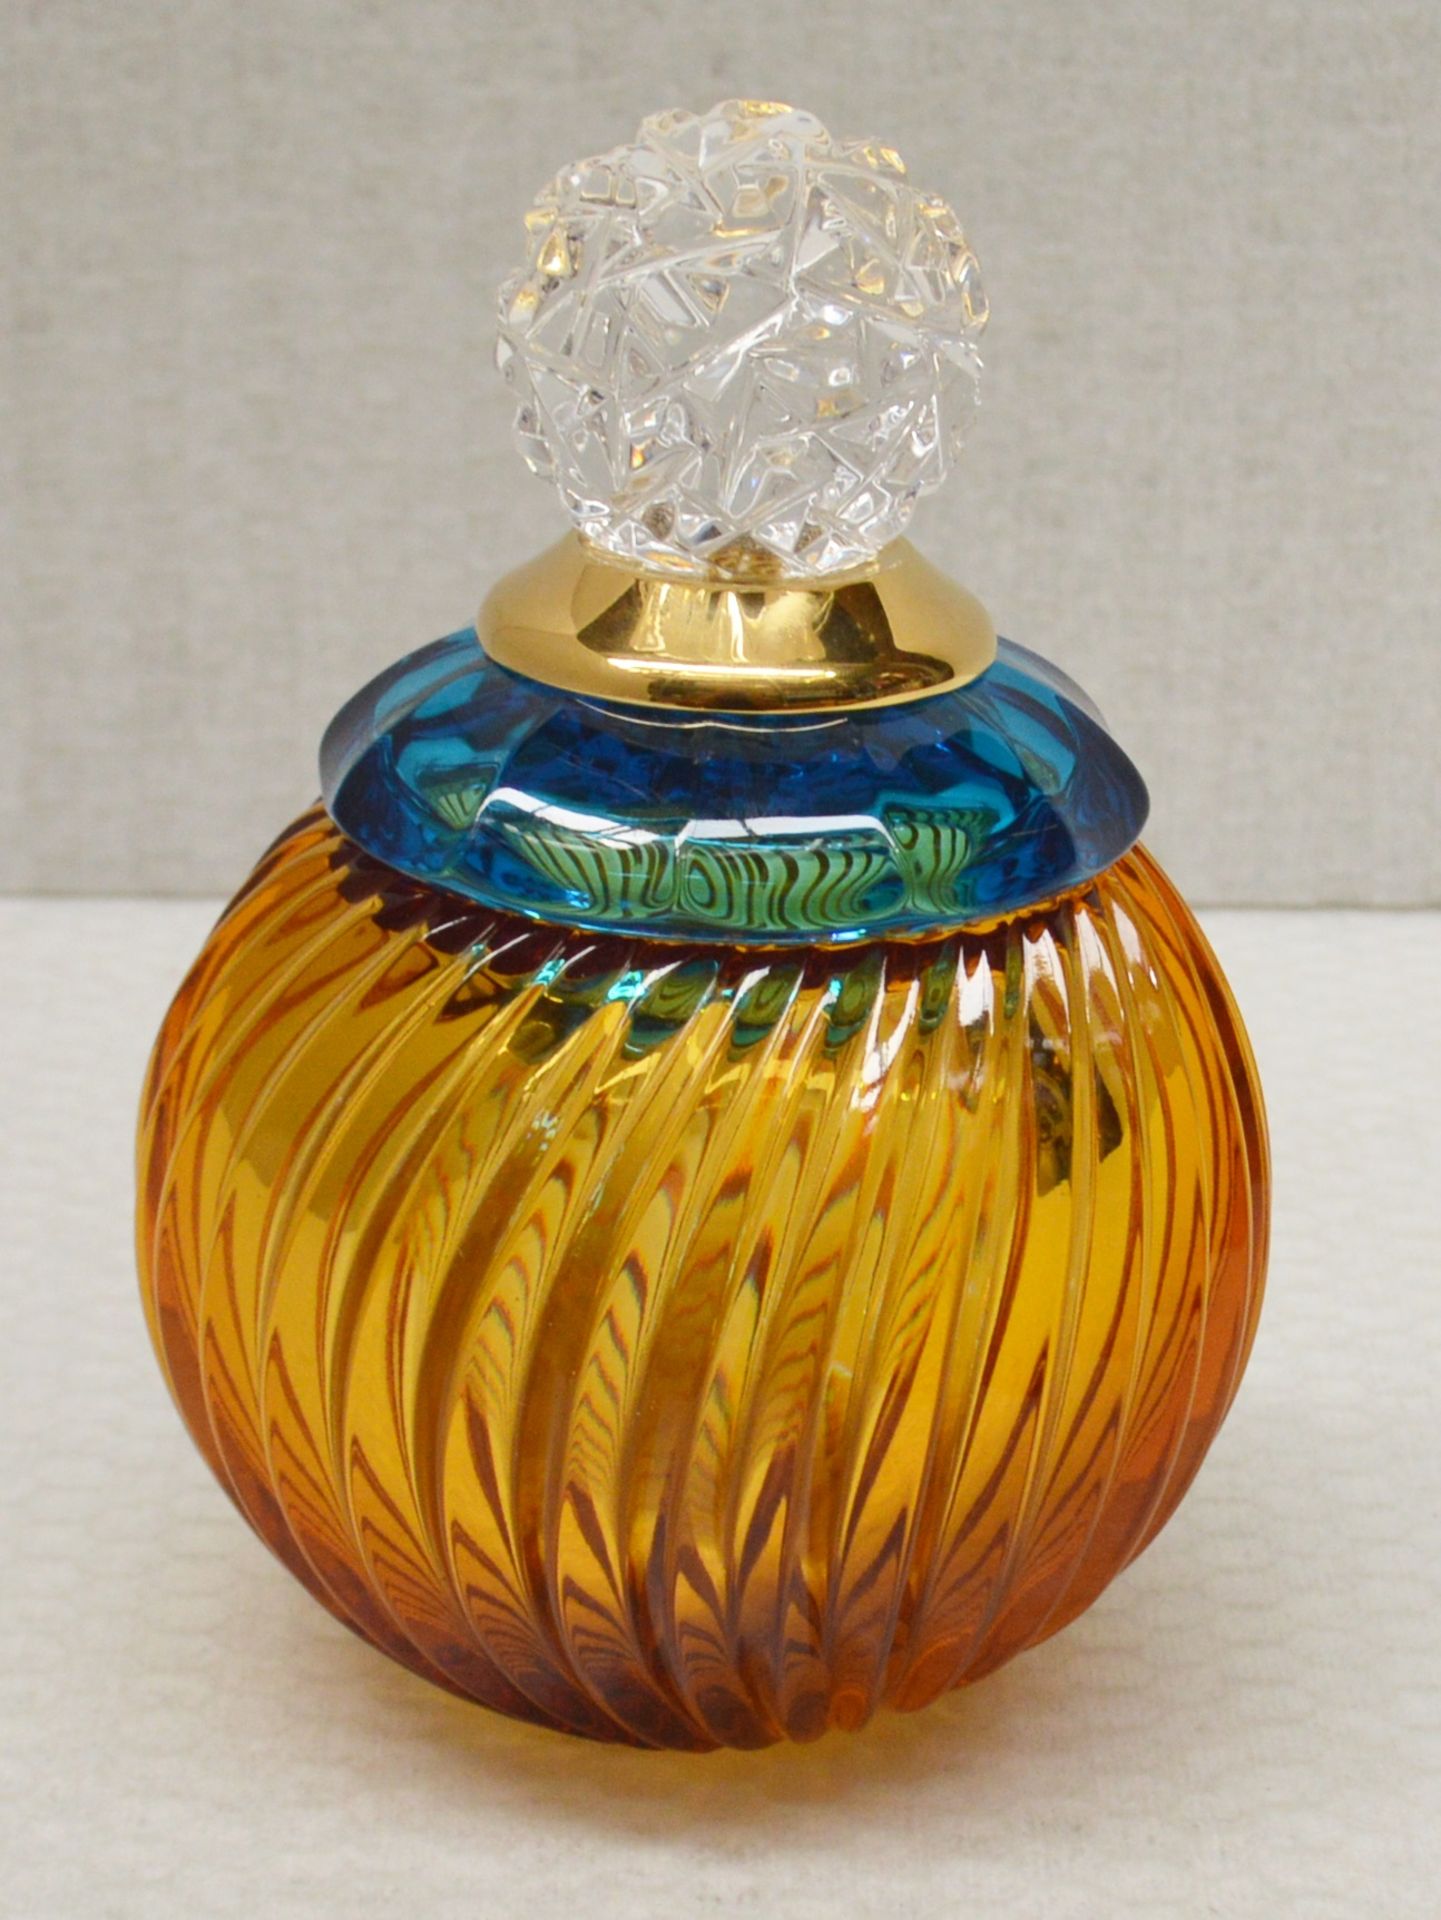 1 x BALDI 'Home Jewels' Italian Hand-crafted Artisan Small Coccinella Jar In Blue And Orange Crystal